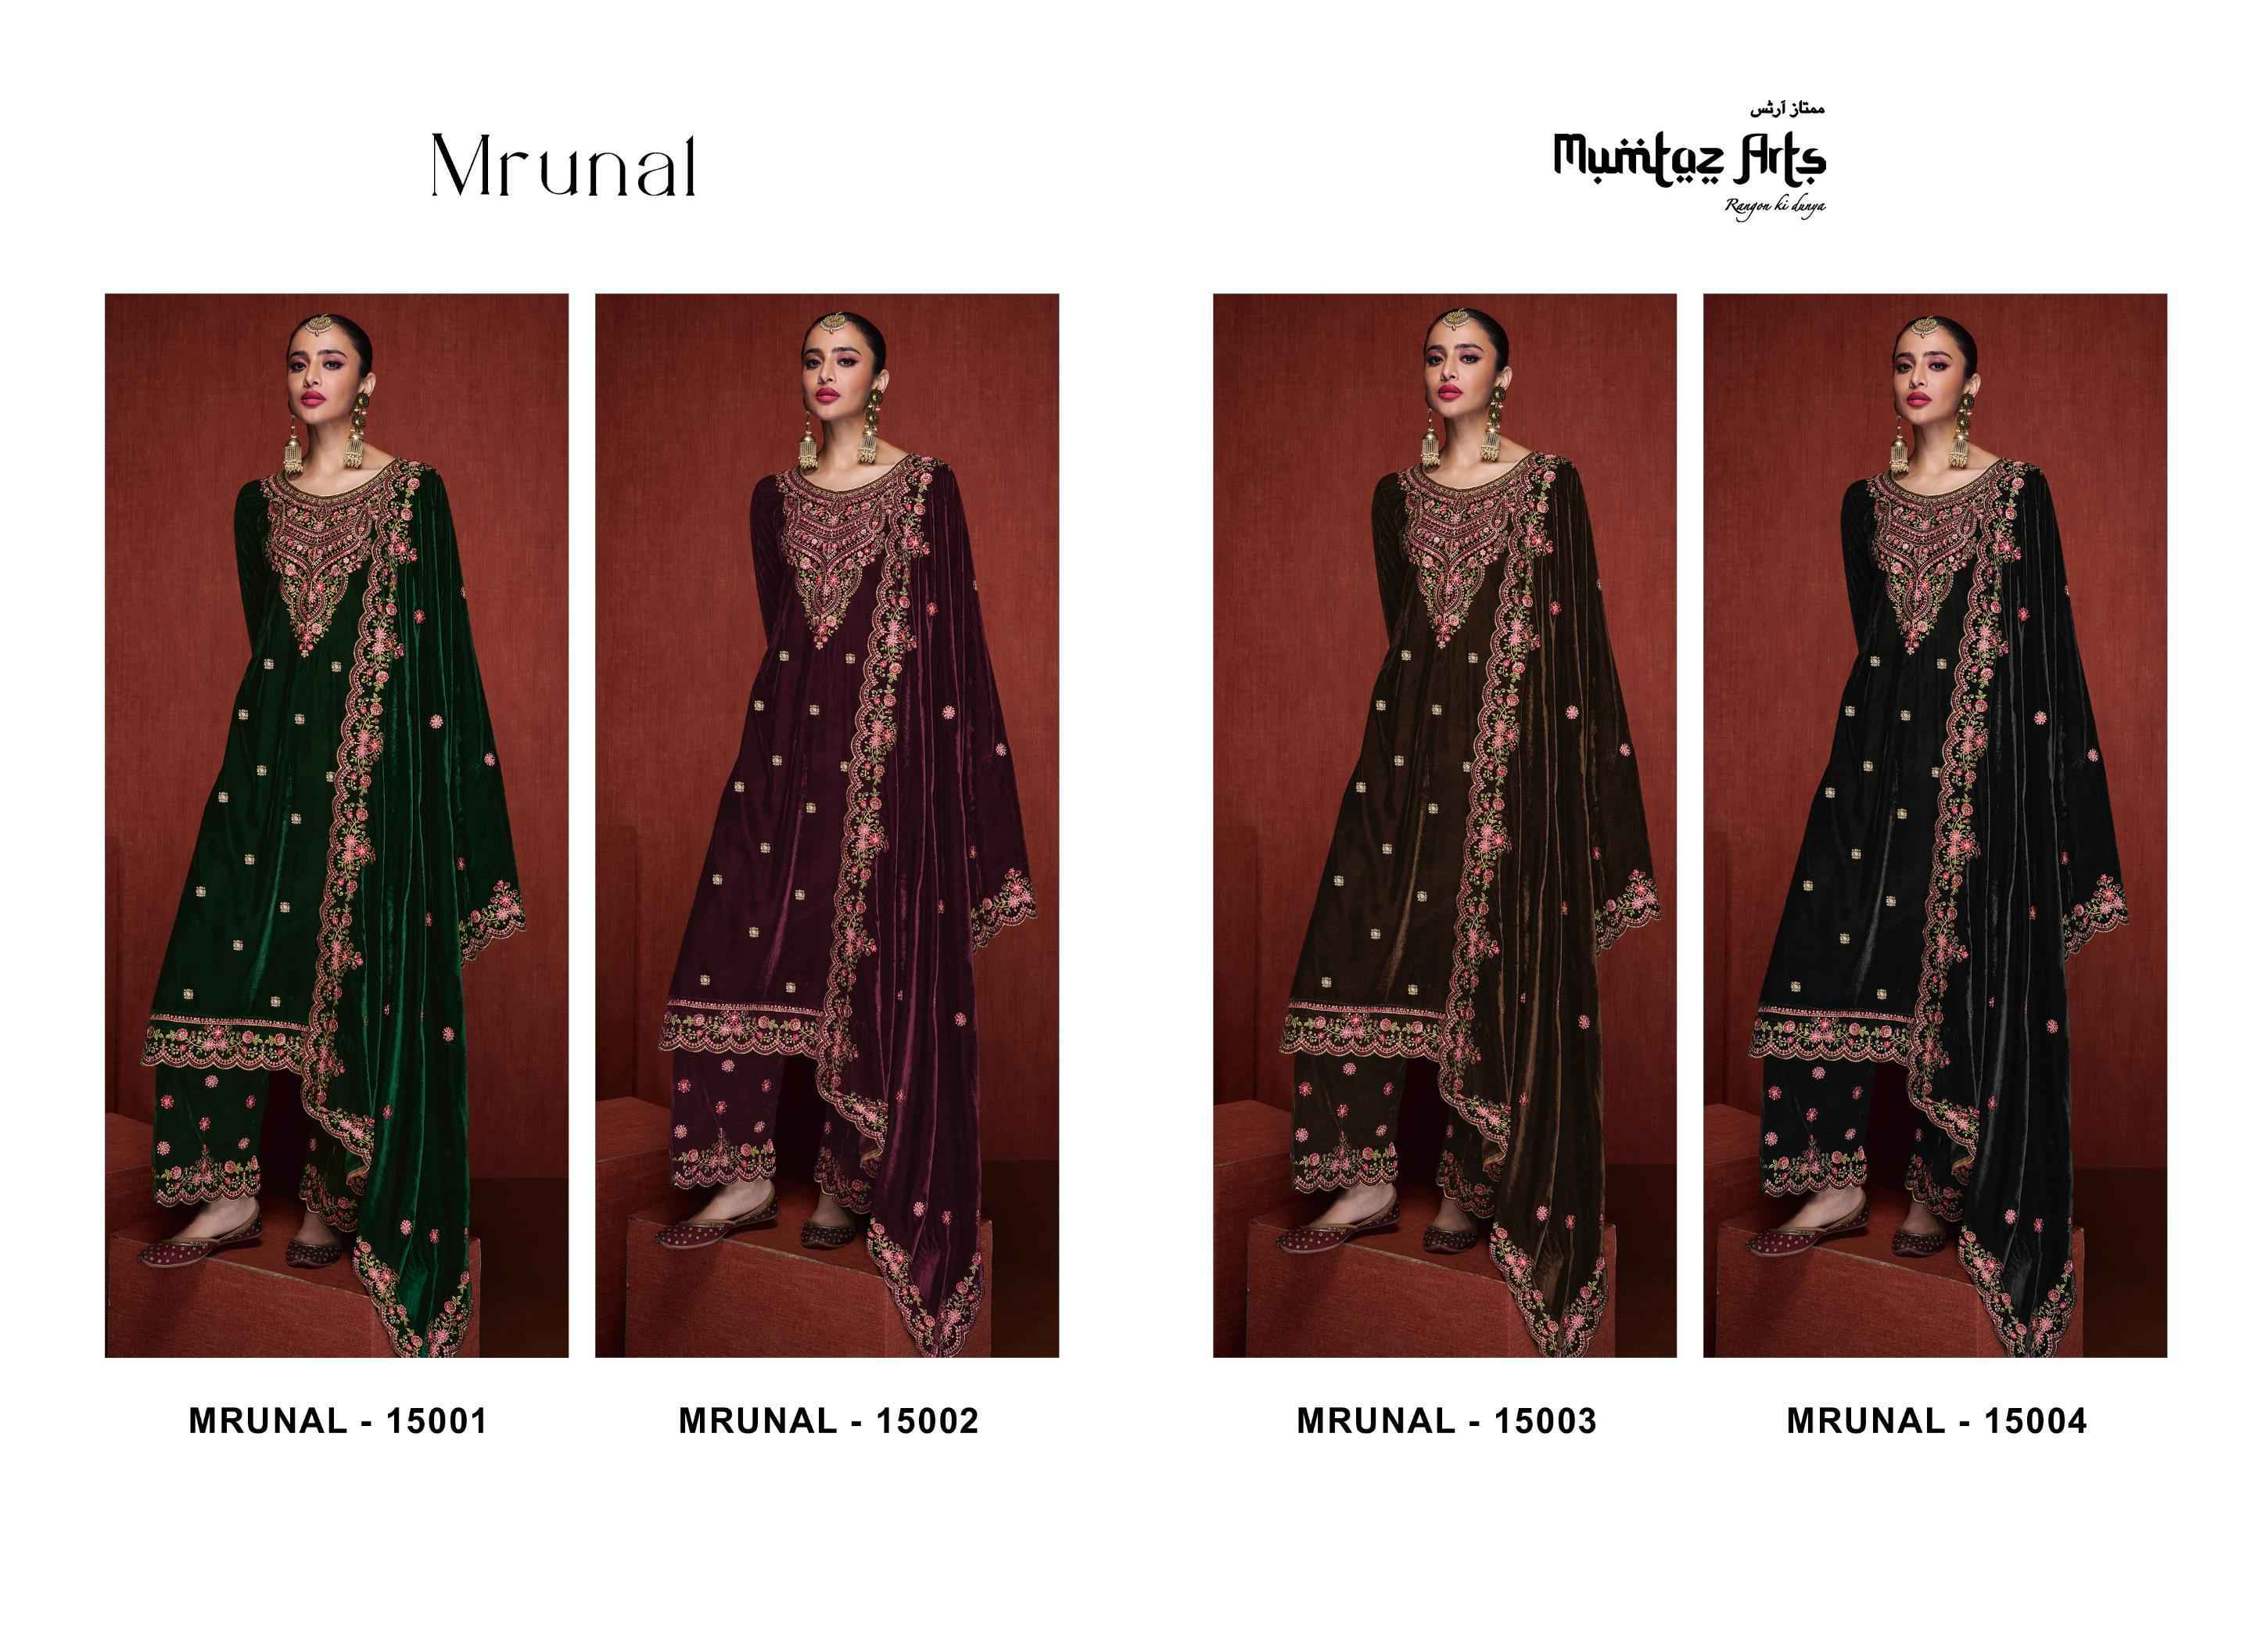 mumtaz arts mrunal velvet dress material 4 pcs catalogue surat wholesale market 0 2023 10 17 19 36 57